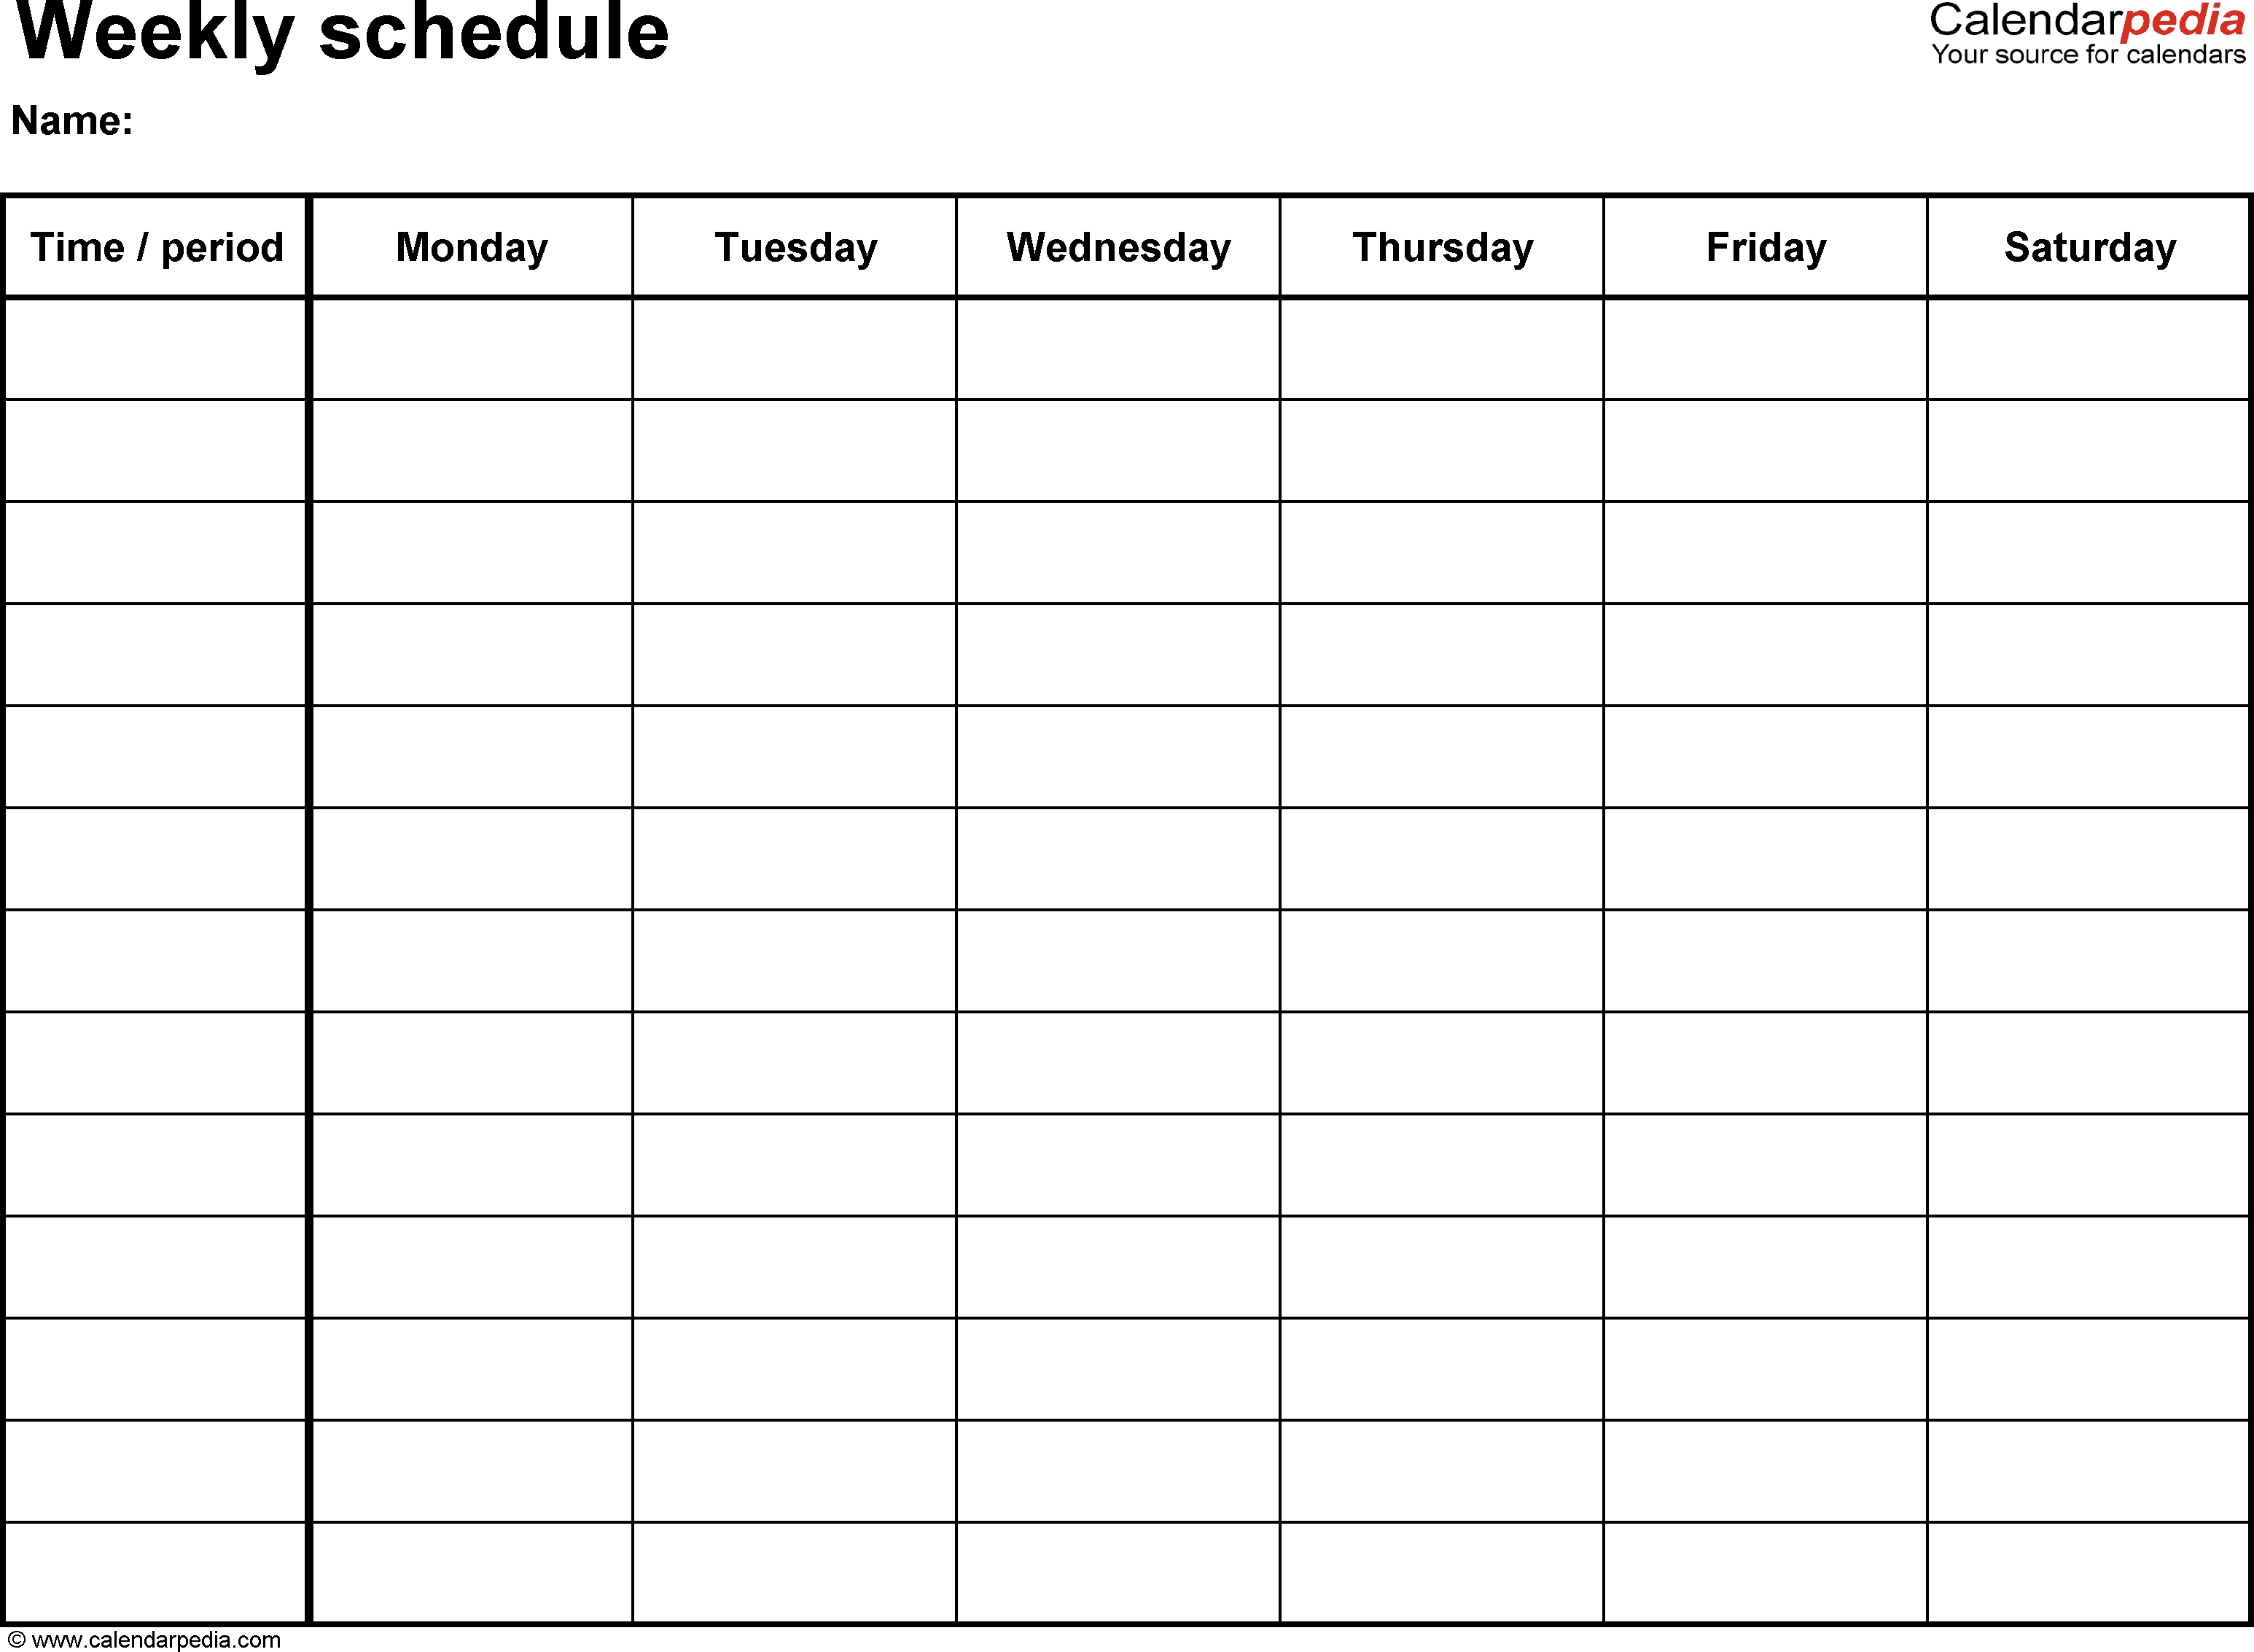 Free Weekly Schedule Templates For Word - 18 Templates Dashing 6 Week Blank Calendar Printable